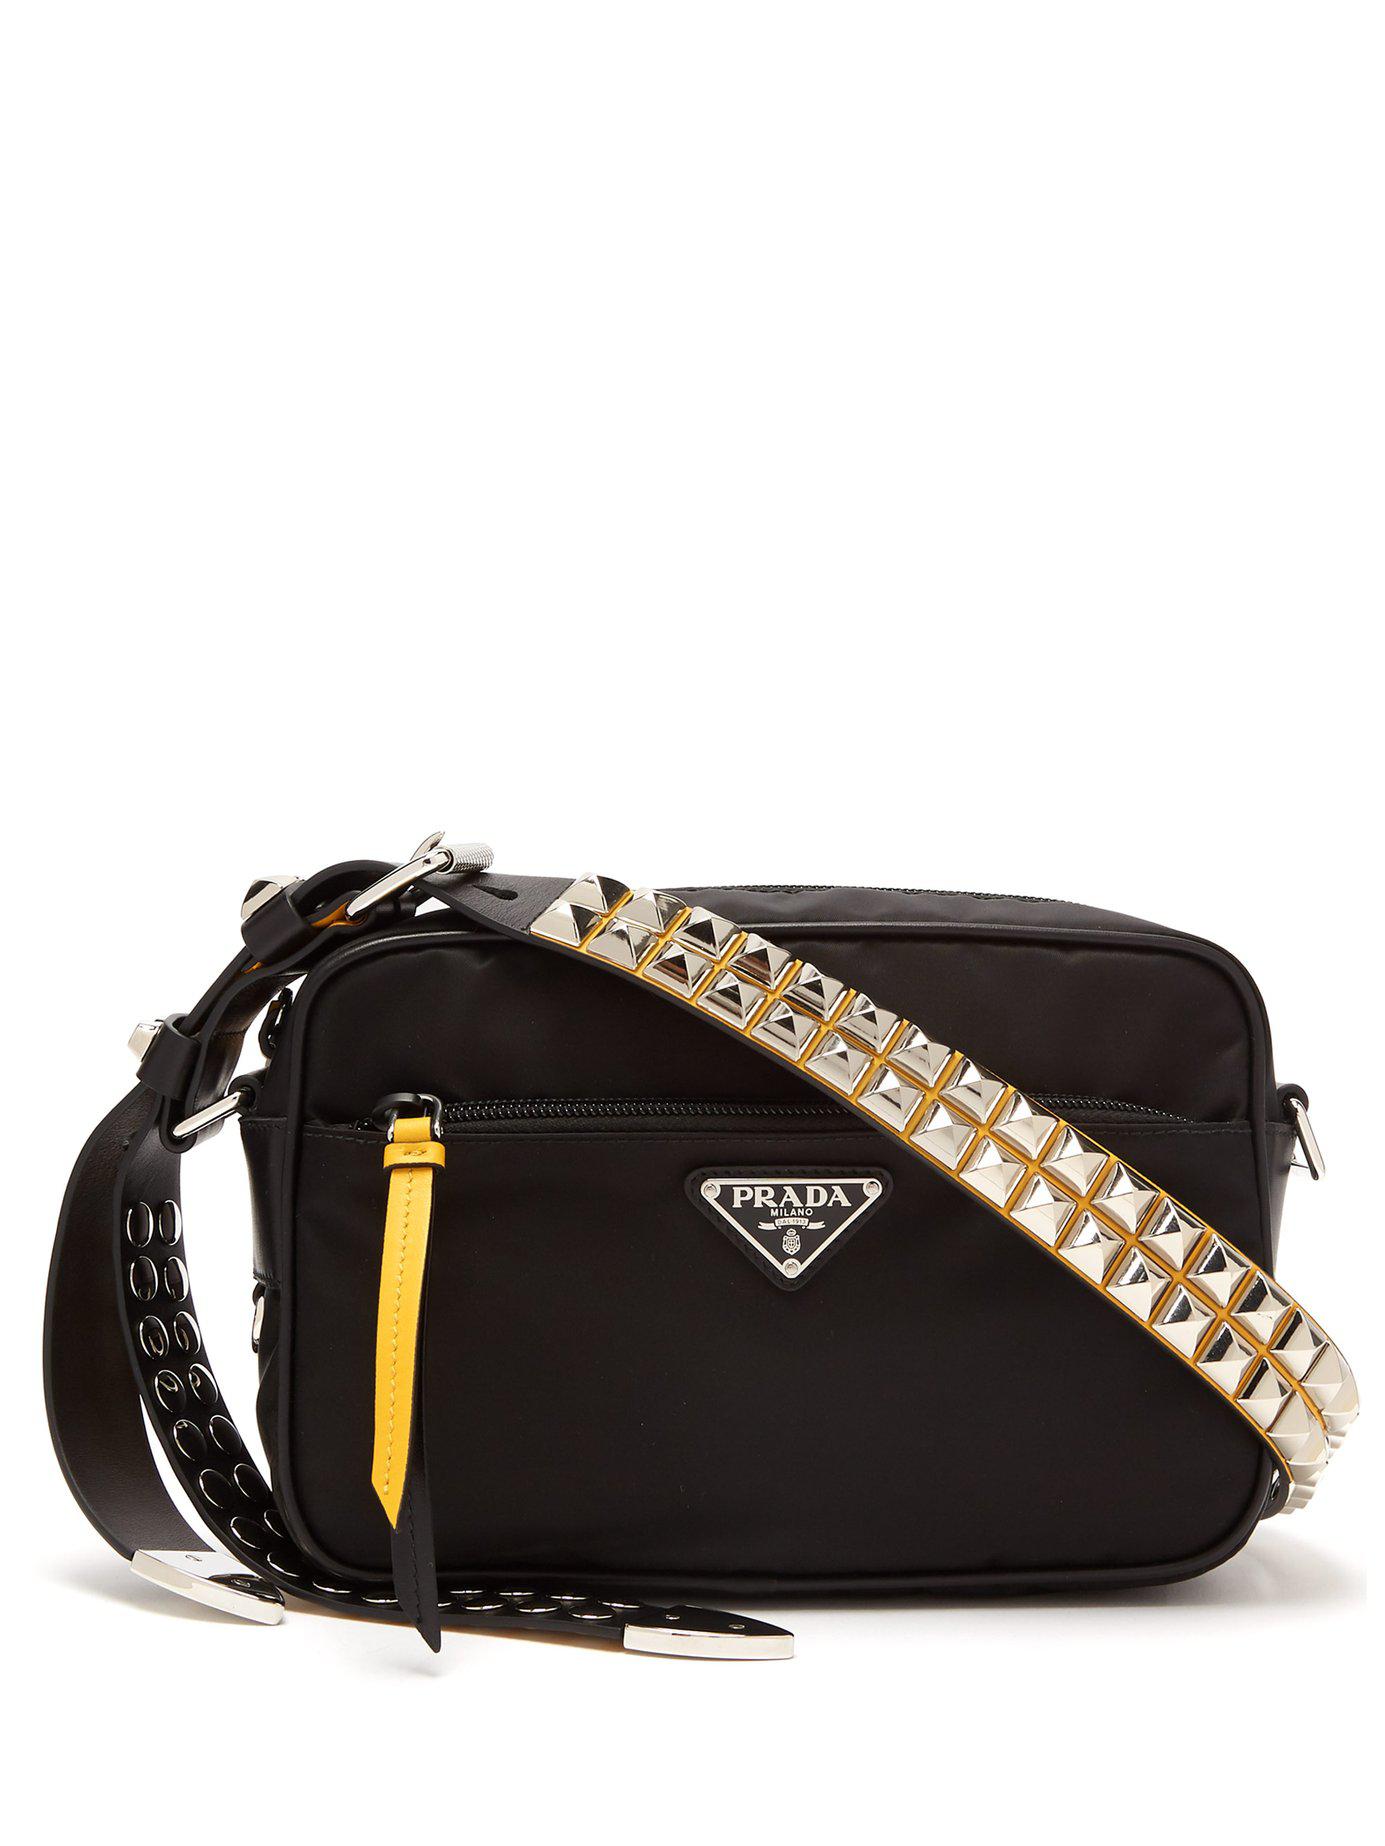 Prada Synthetic Stud-embellished Strap Nylon Cross-body Bag in Black - Lyst